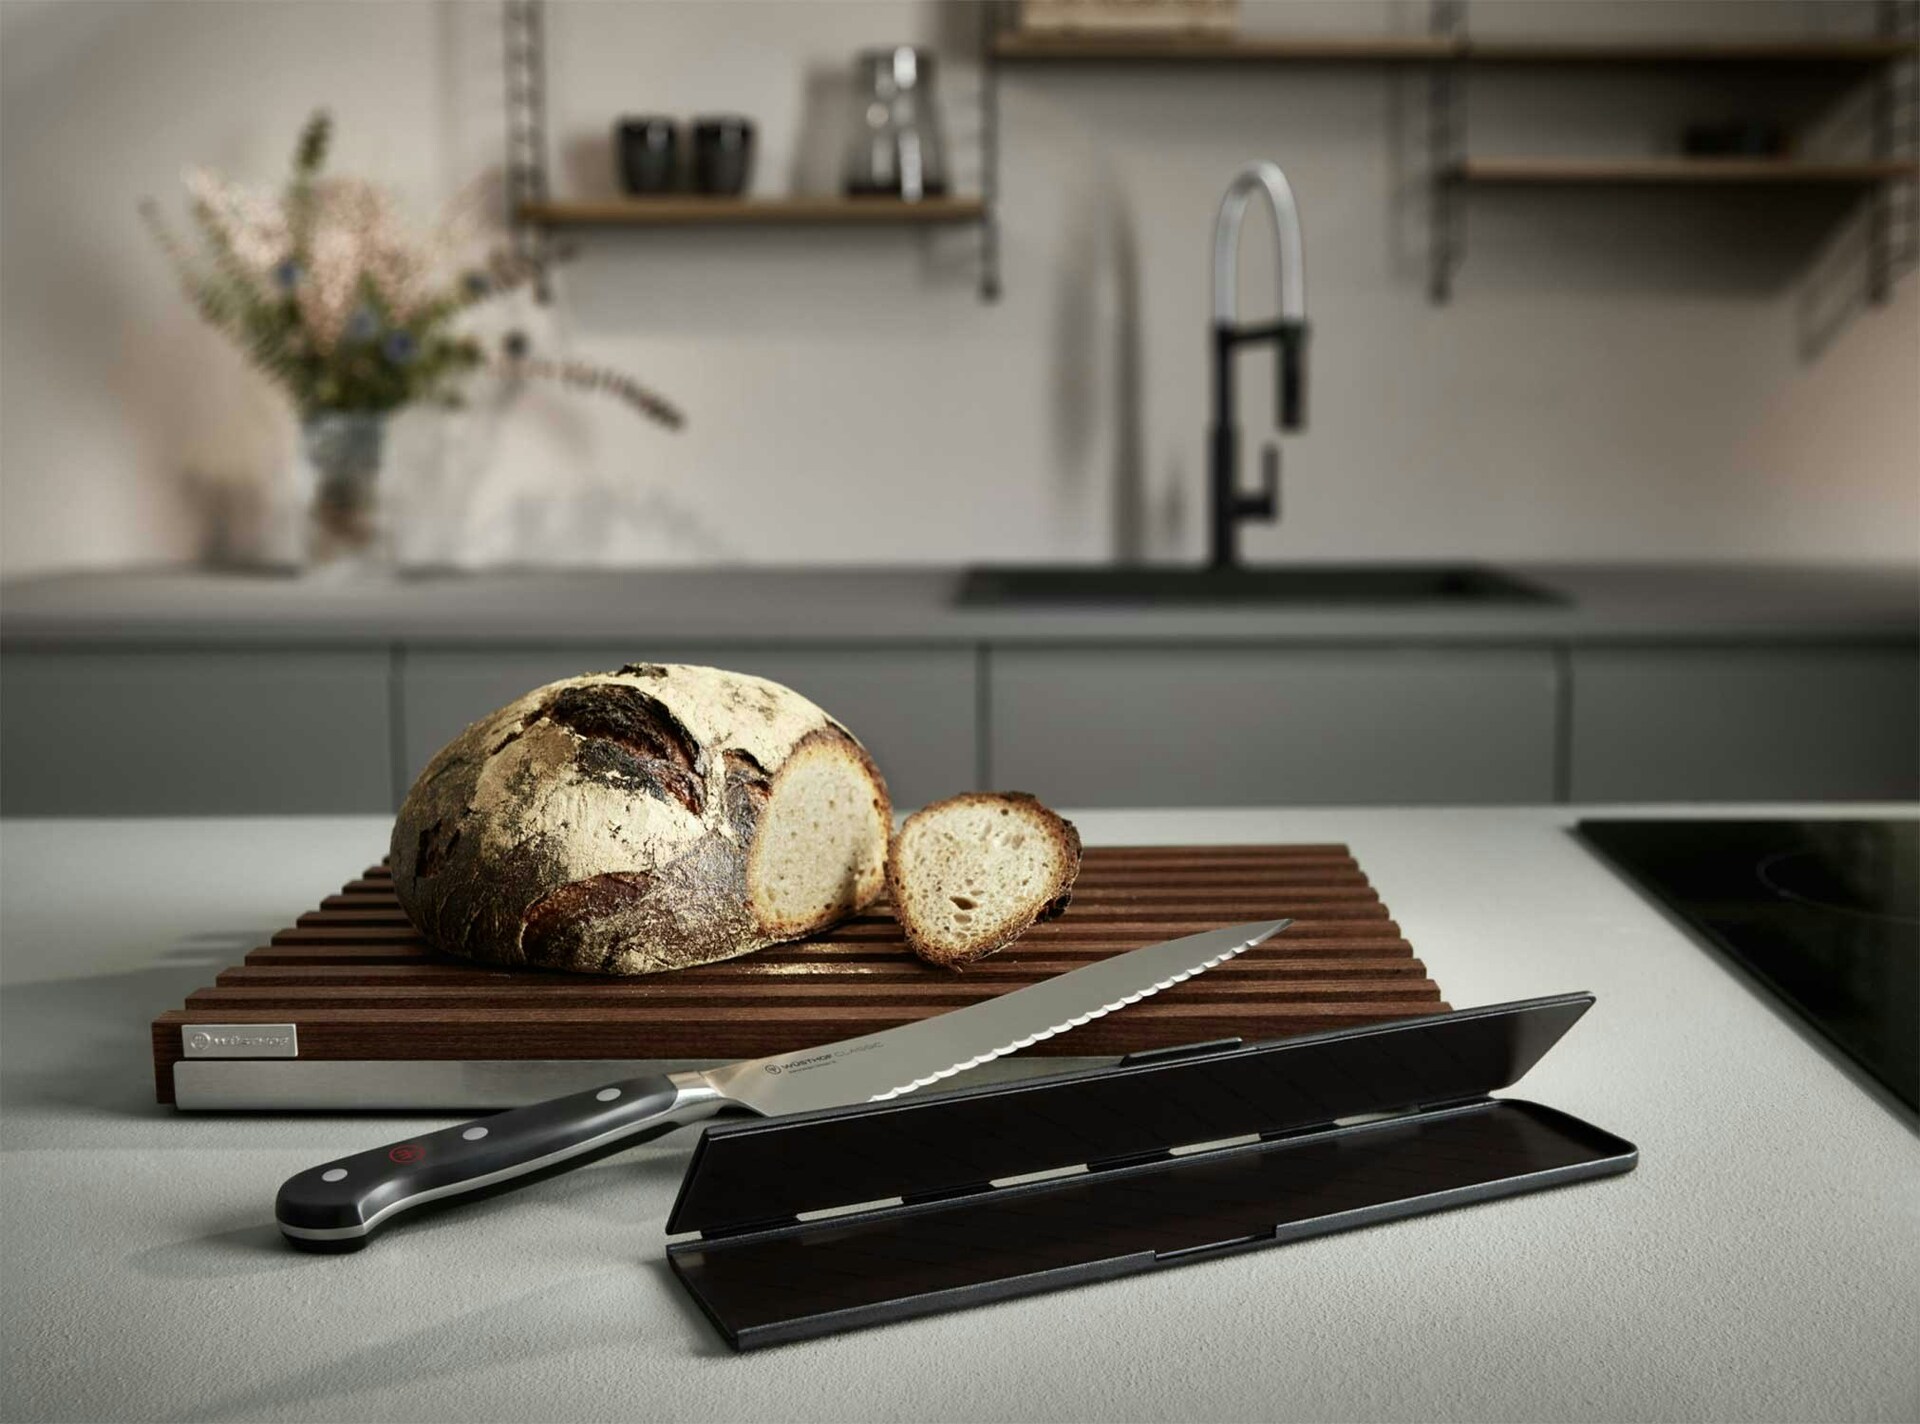 https://royaldesign.com/image/2/wusthof-cutting-board-for-bread-0